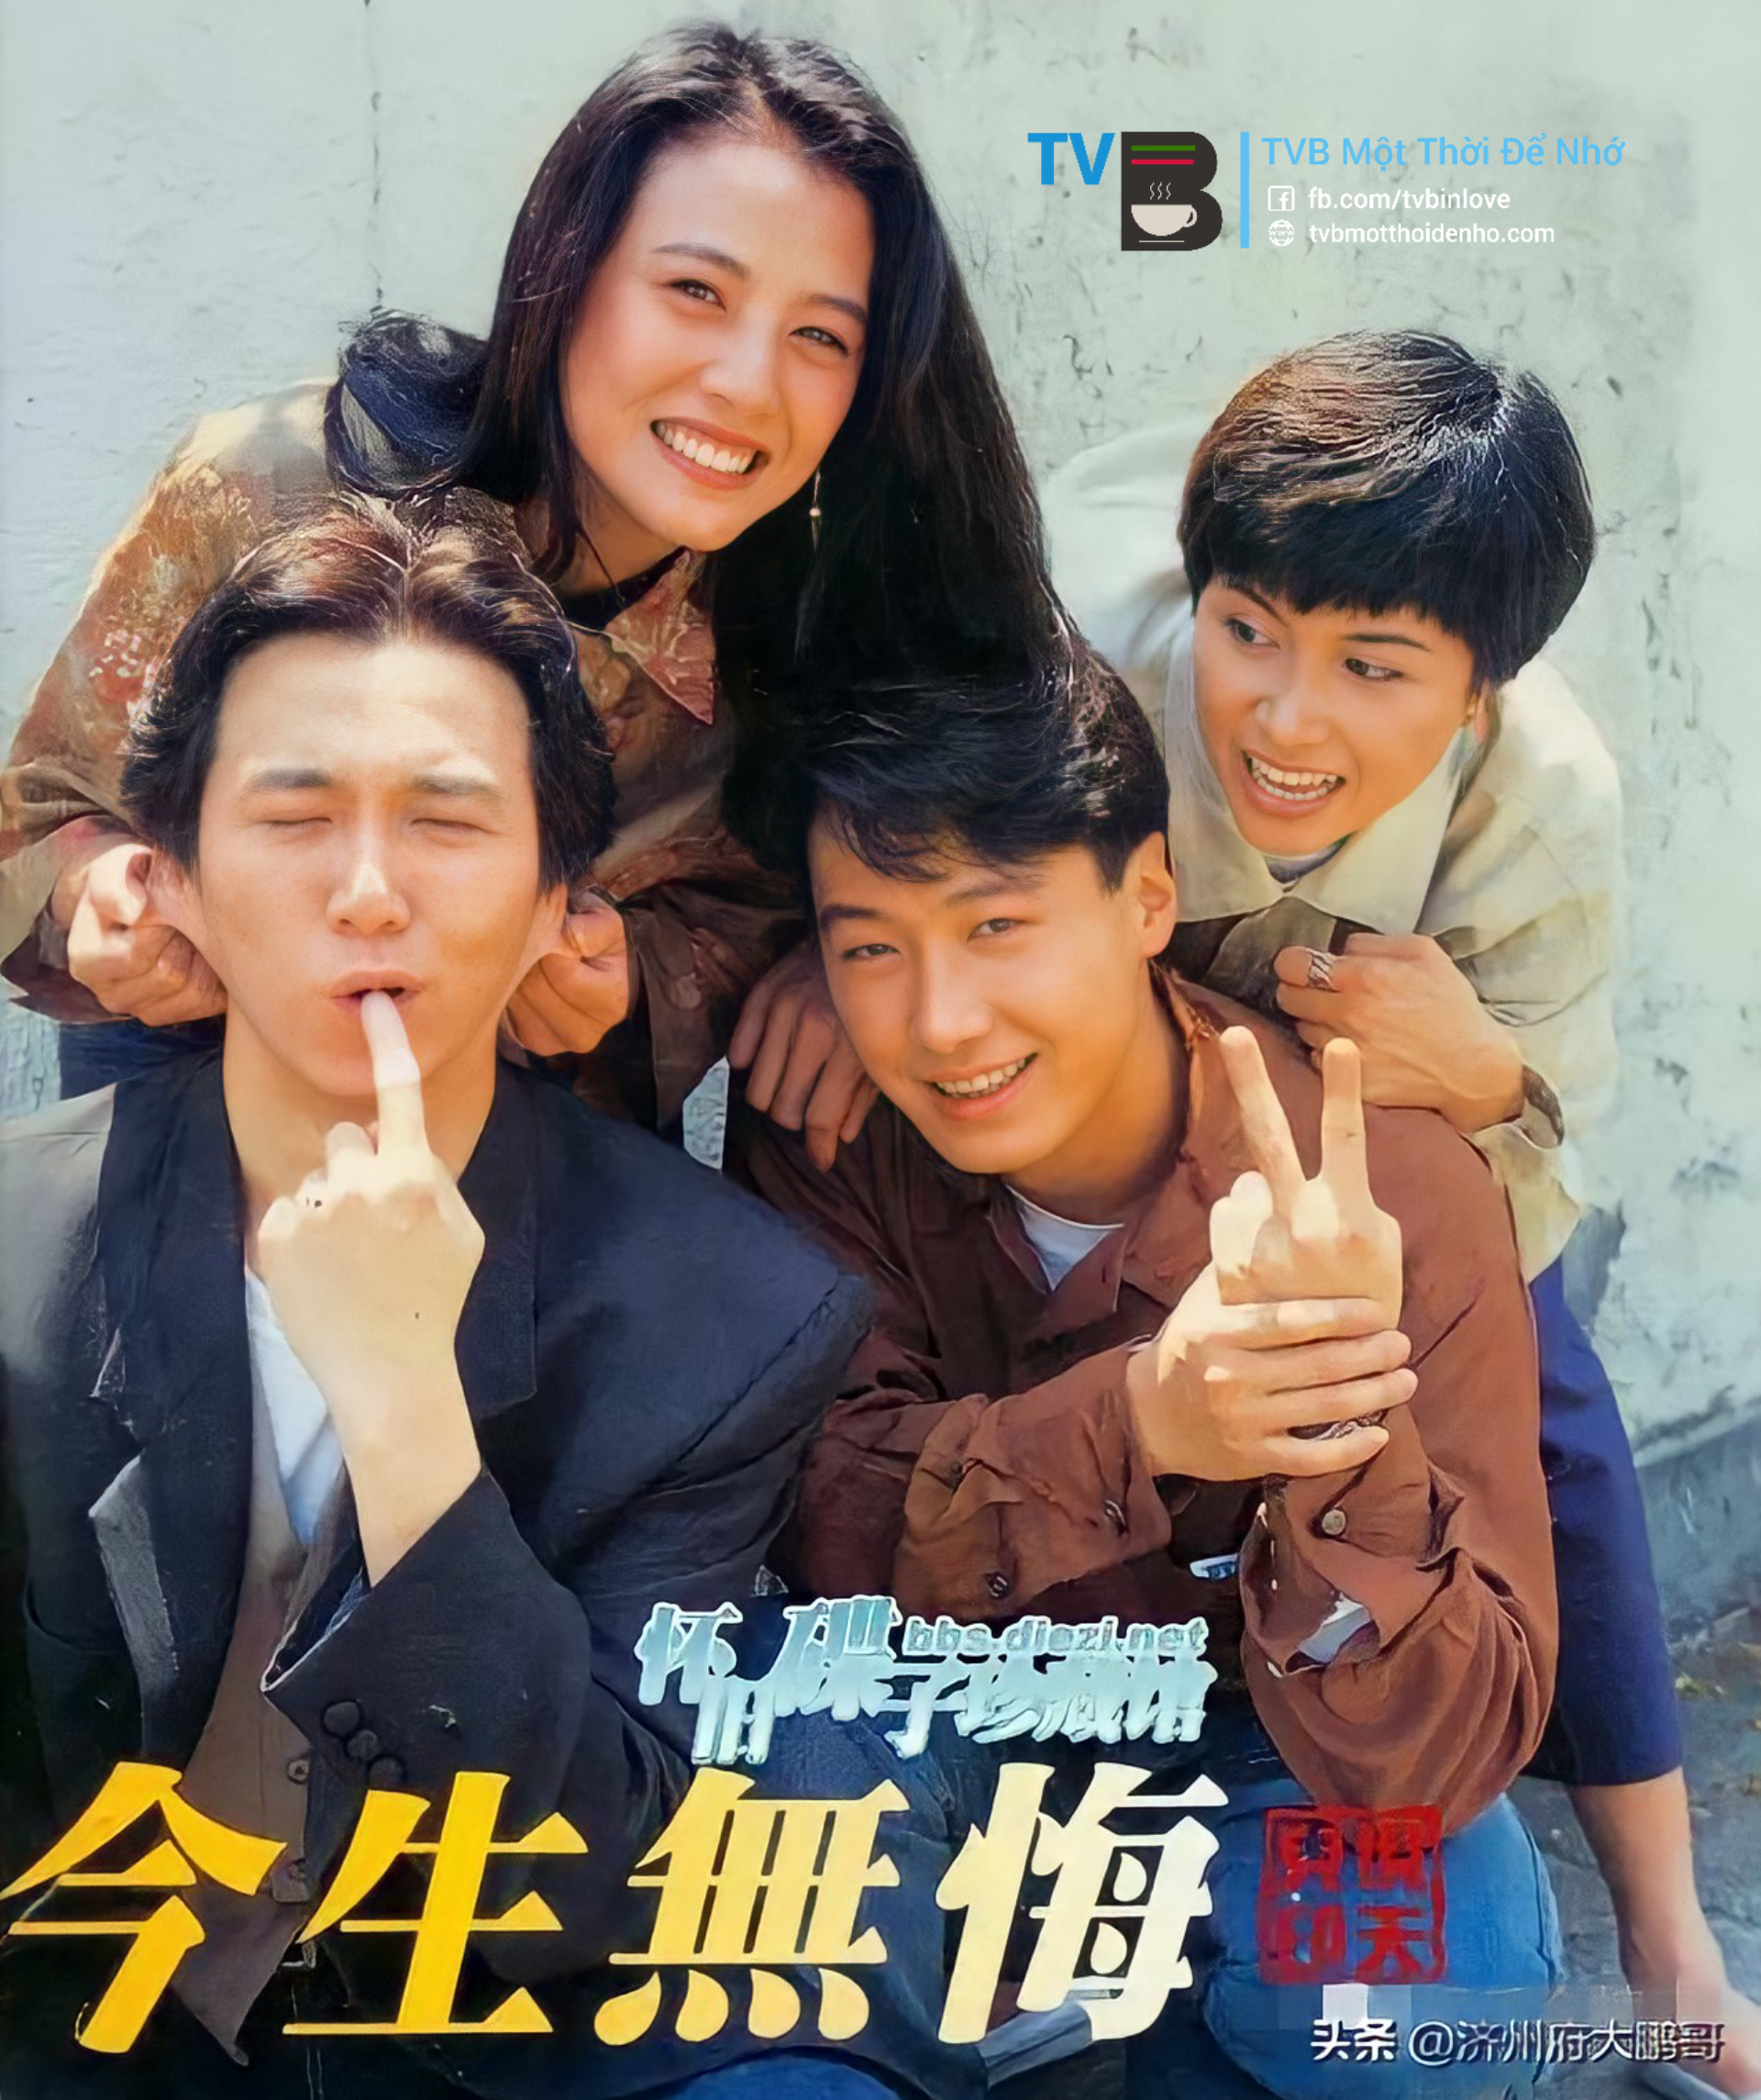 Nel 1991, Wen Zhao Luan ha interpretato Cao Thien Tuan in Kim Sinh Vo Hoi